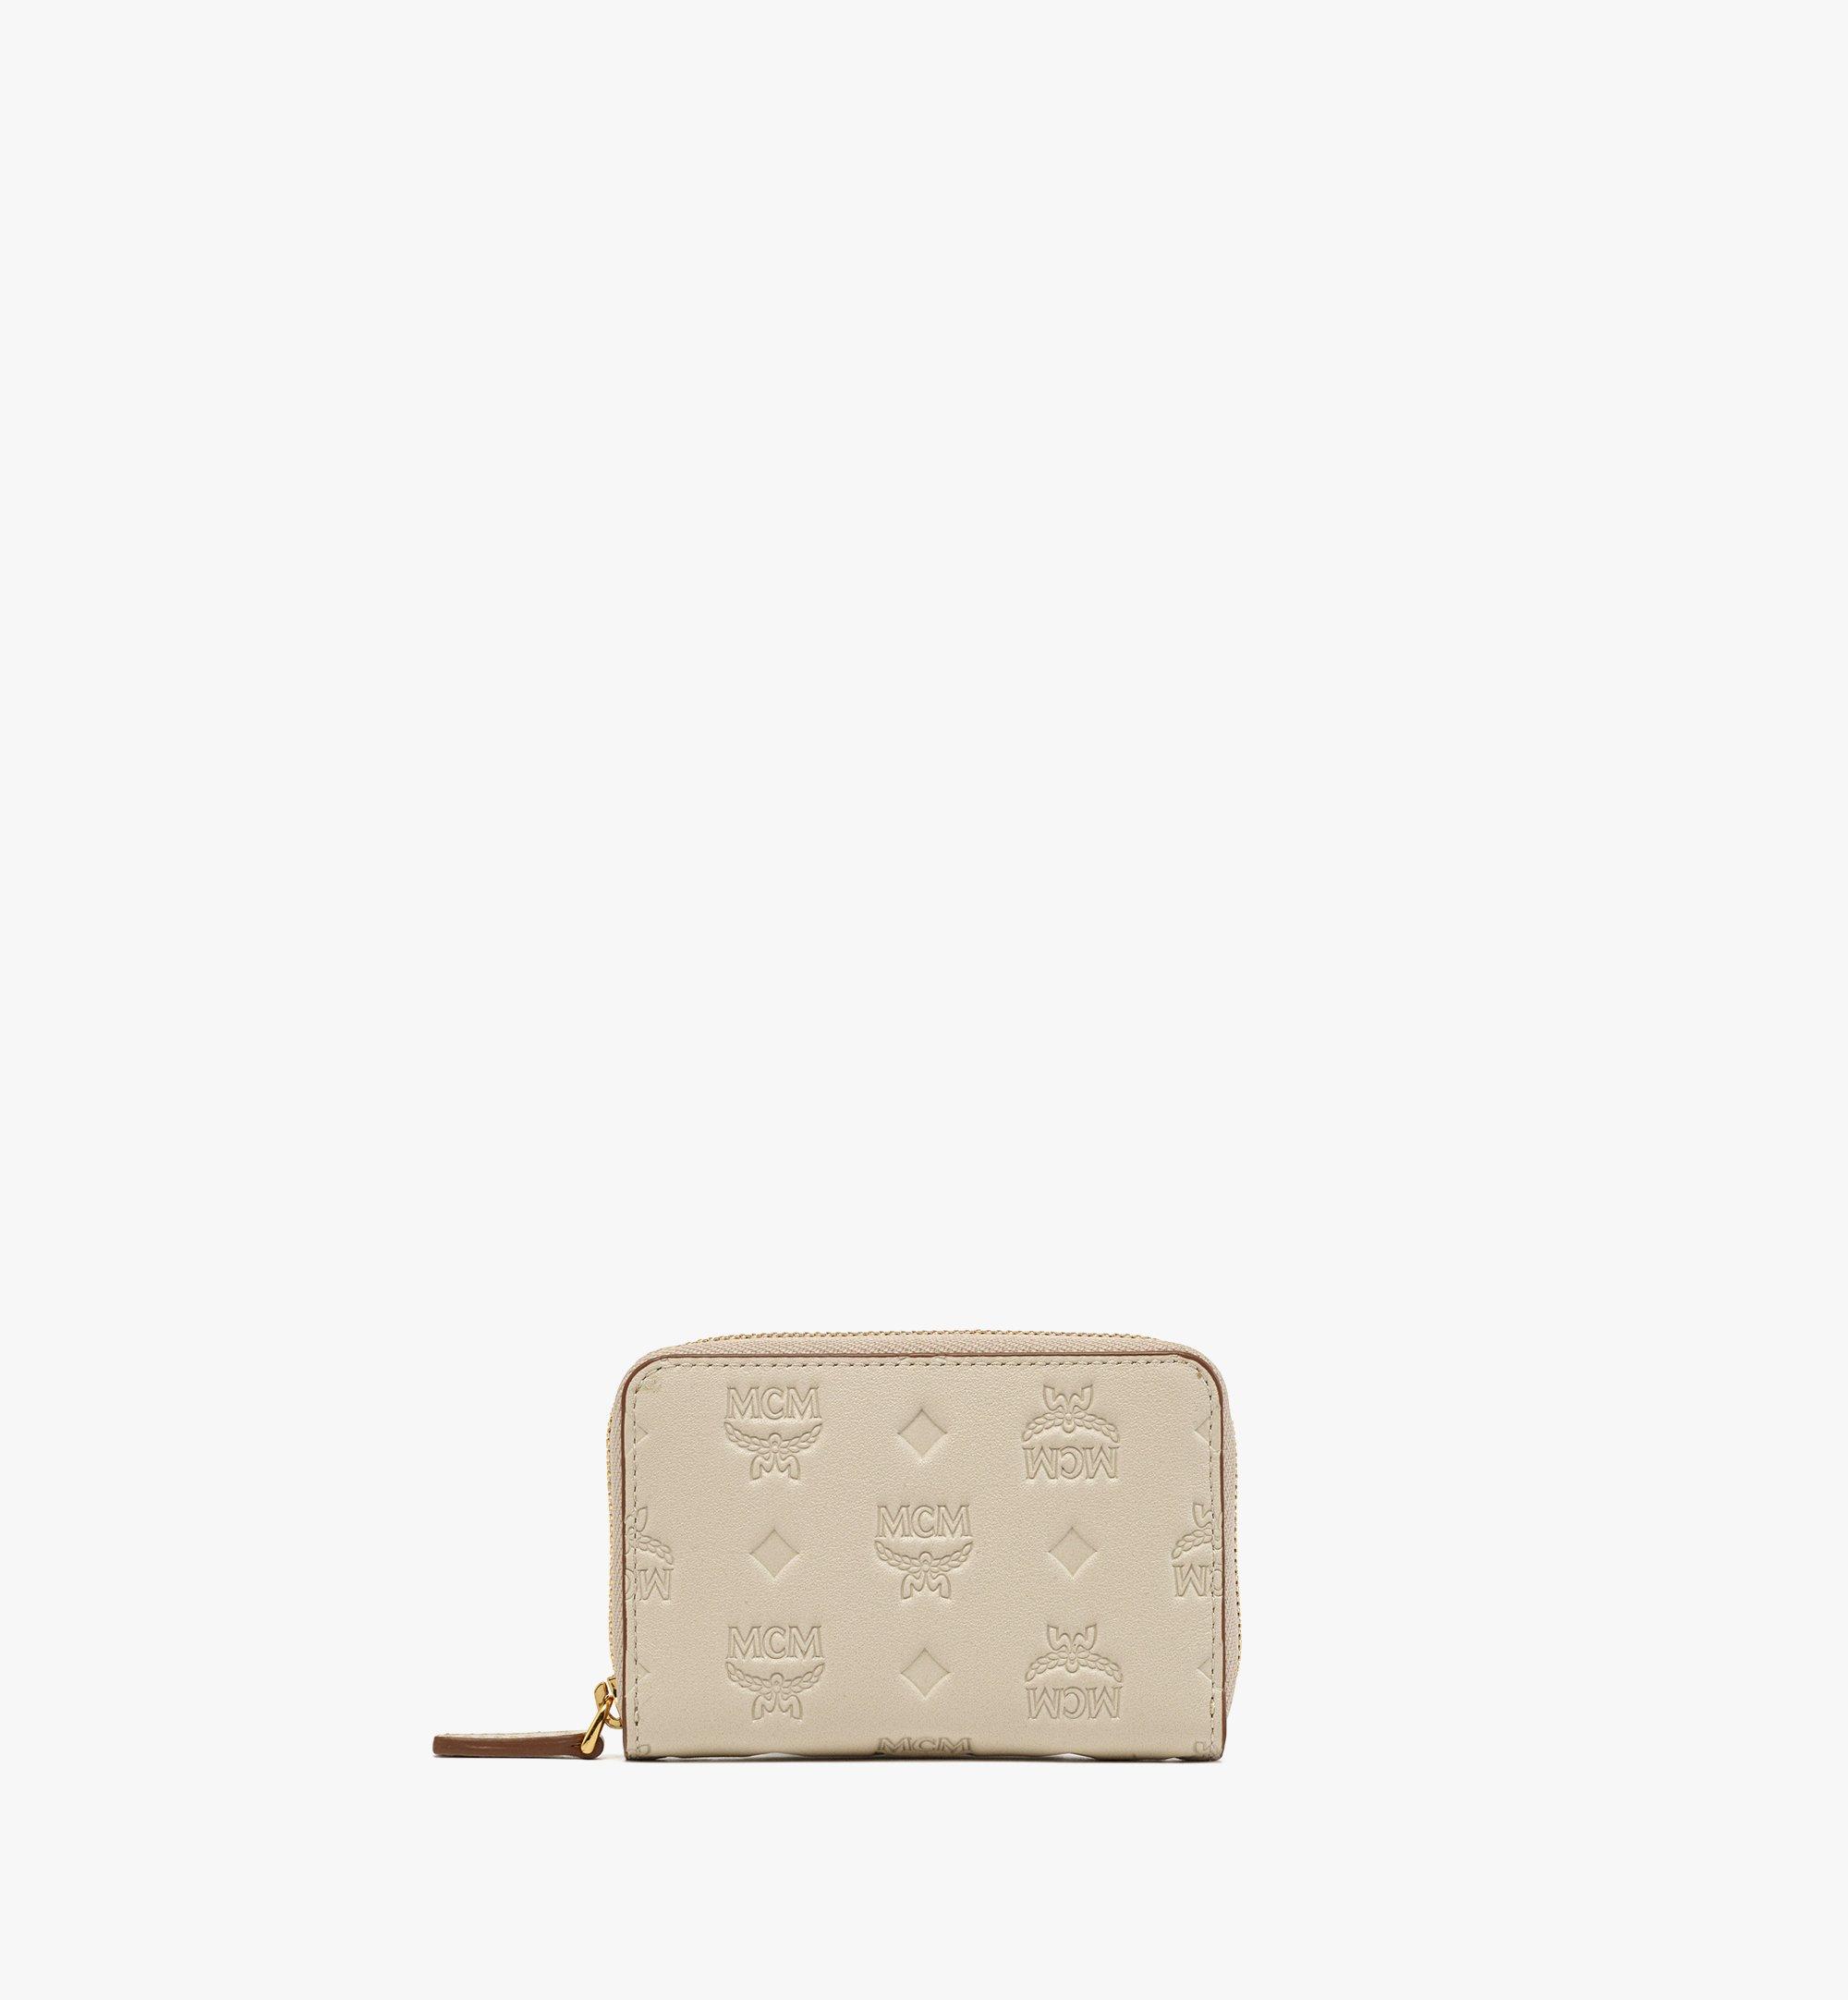 Mcm Aren Bi-Fold Leather Wallet